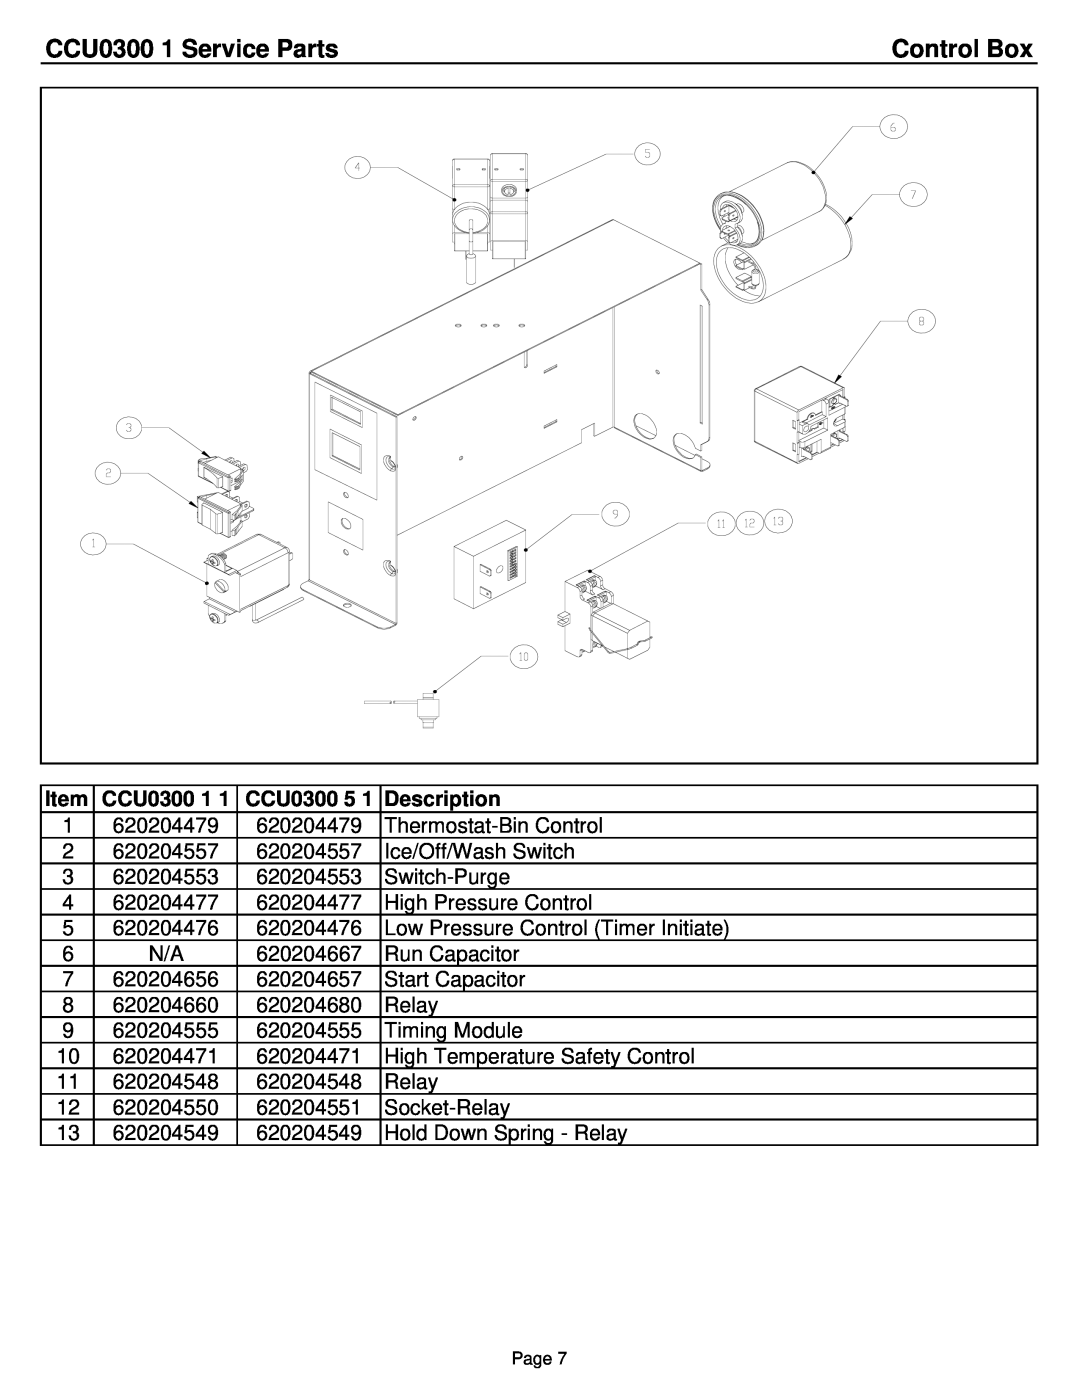 Cornelius manual Control Box, CCU0300 1 Service Parts, Description 